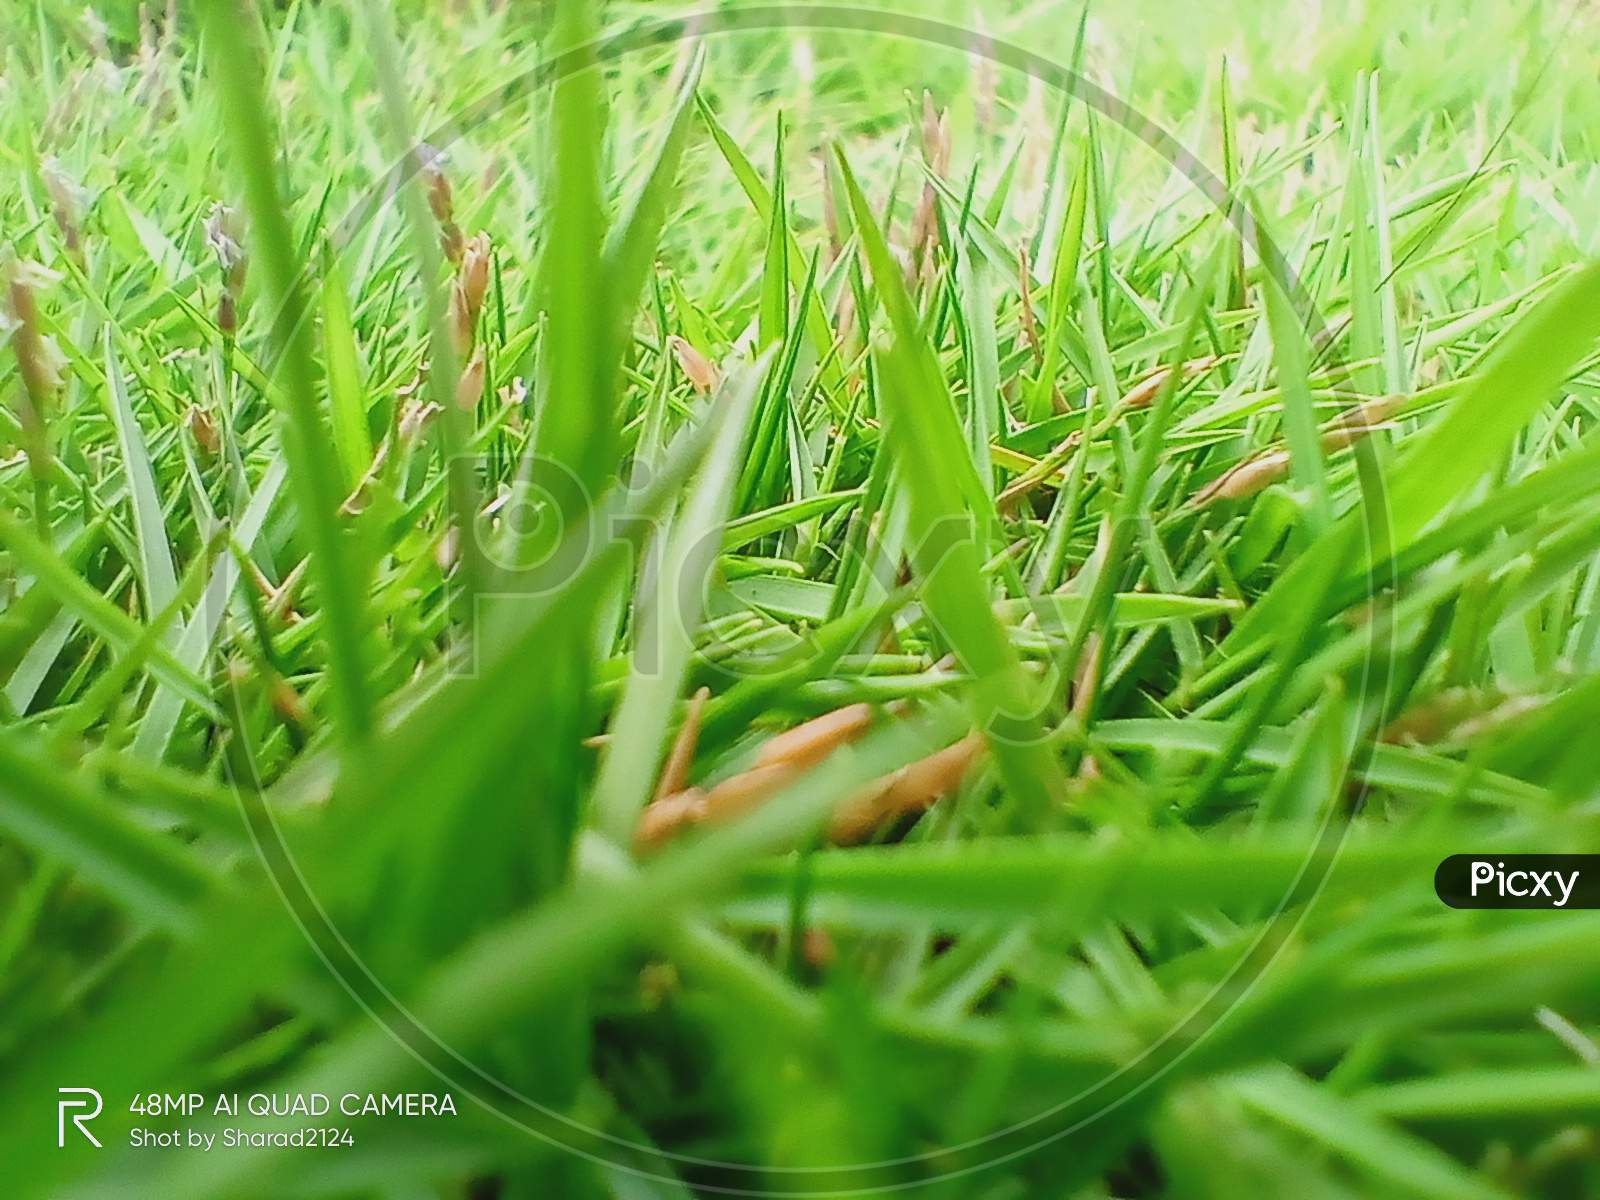 Lawan grass